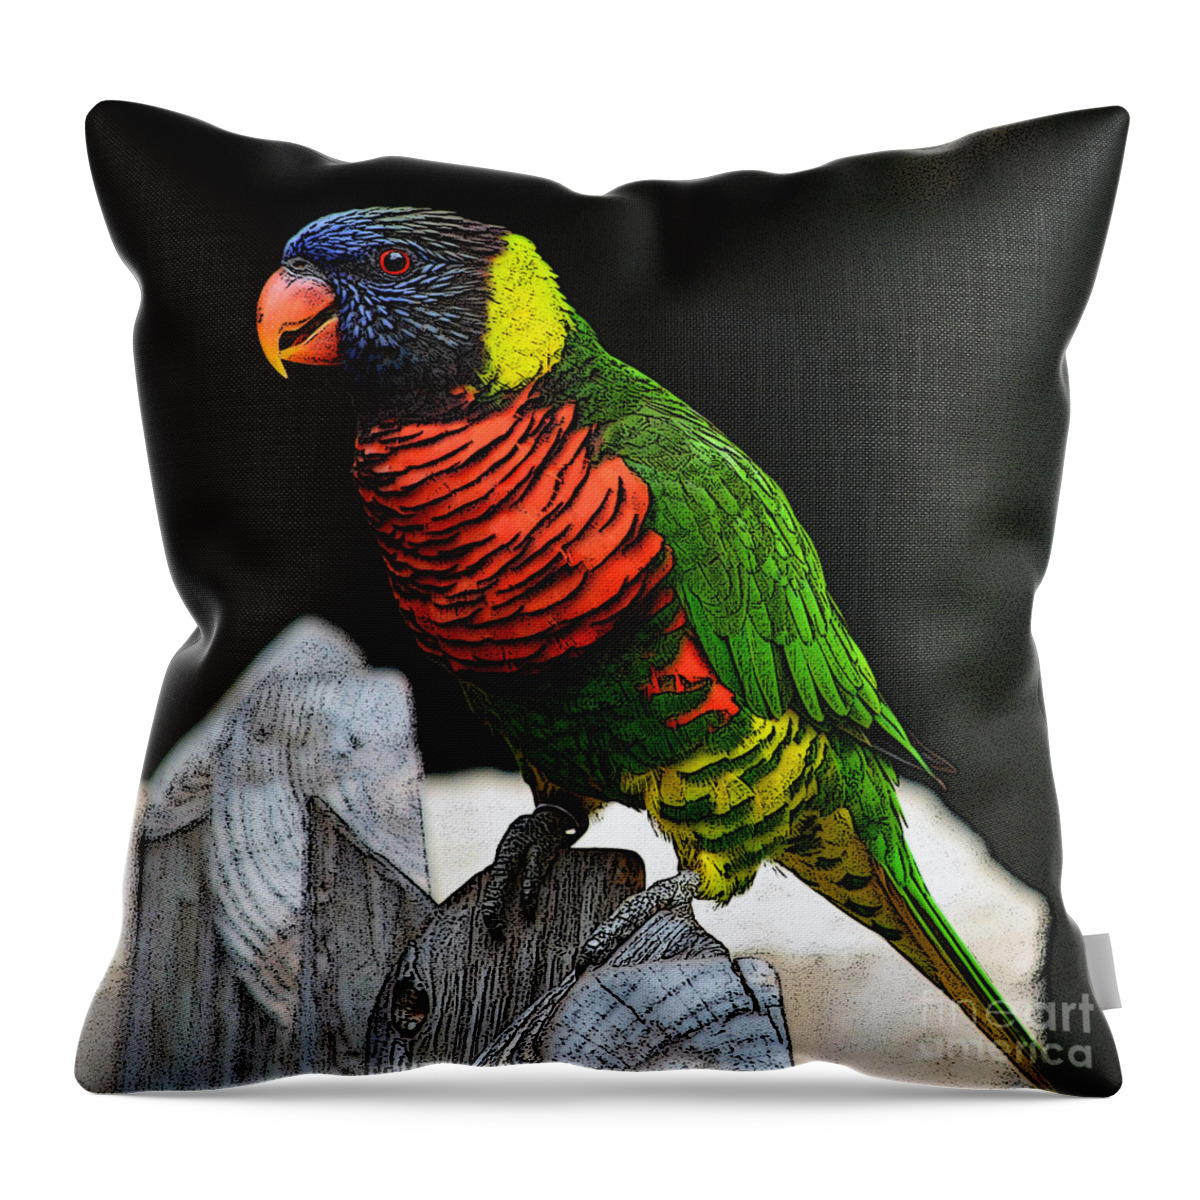 Parakeet Throw Pillow featuring the digital art Parakeet Vibrant Colorful Profile Poster Edges Digital Art by Shawn O'Brien